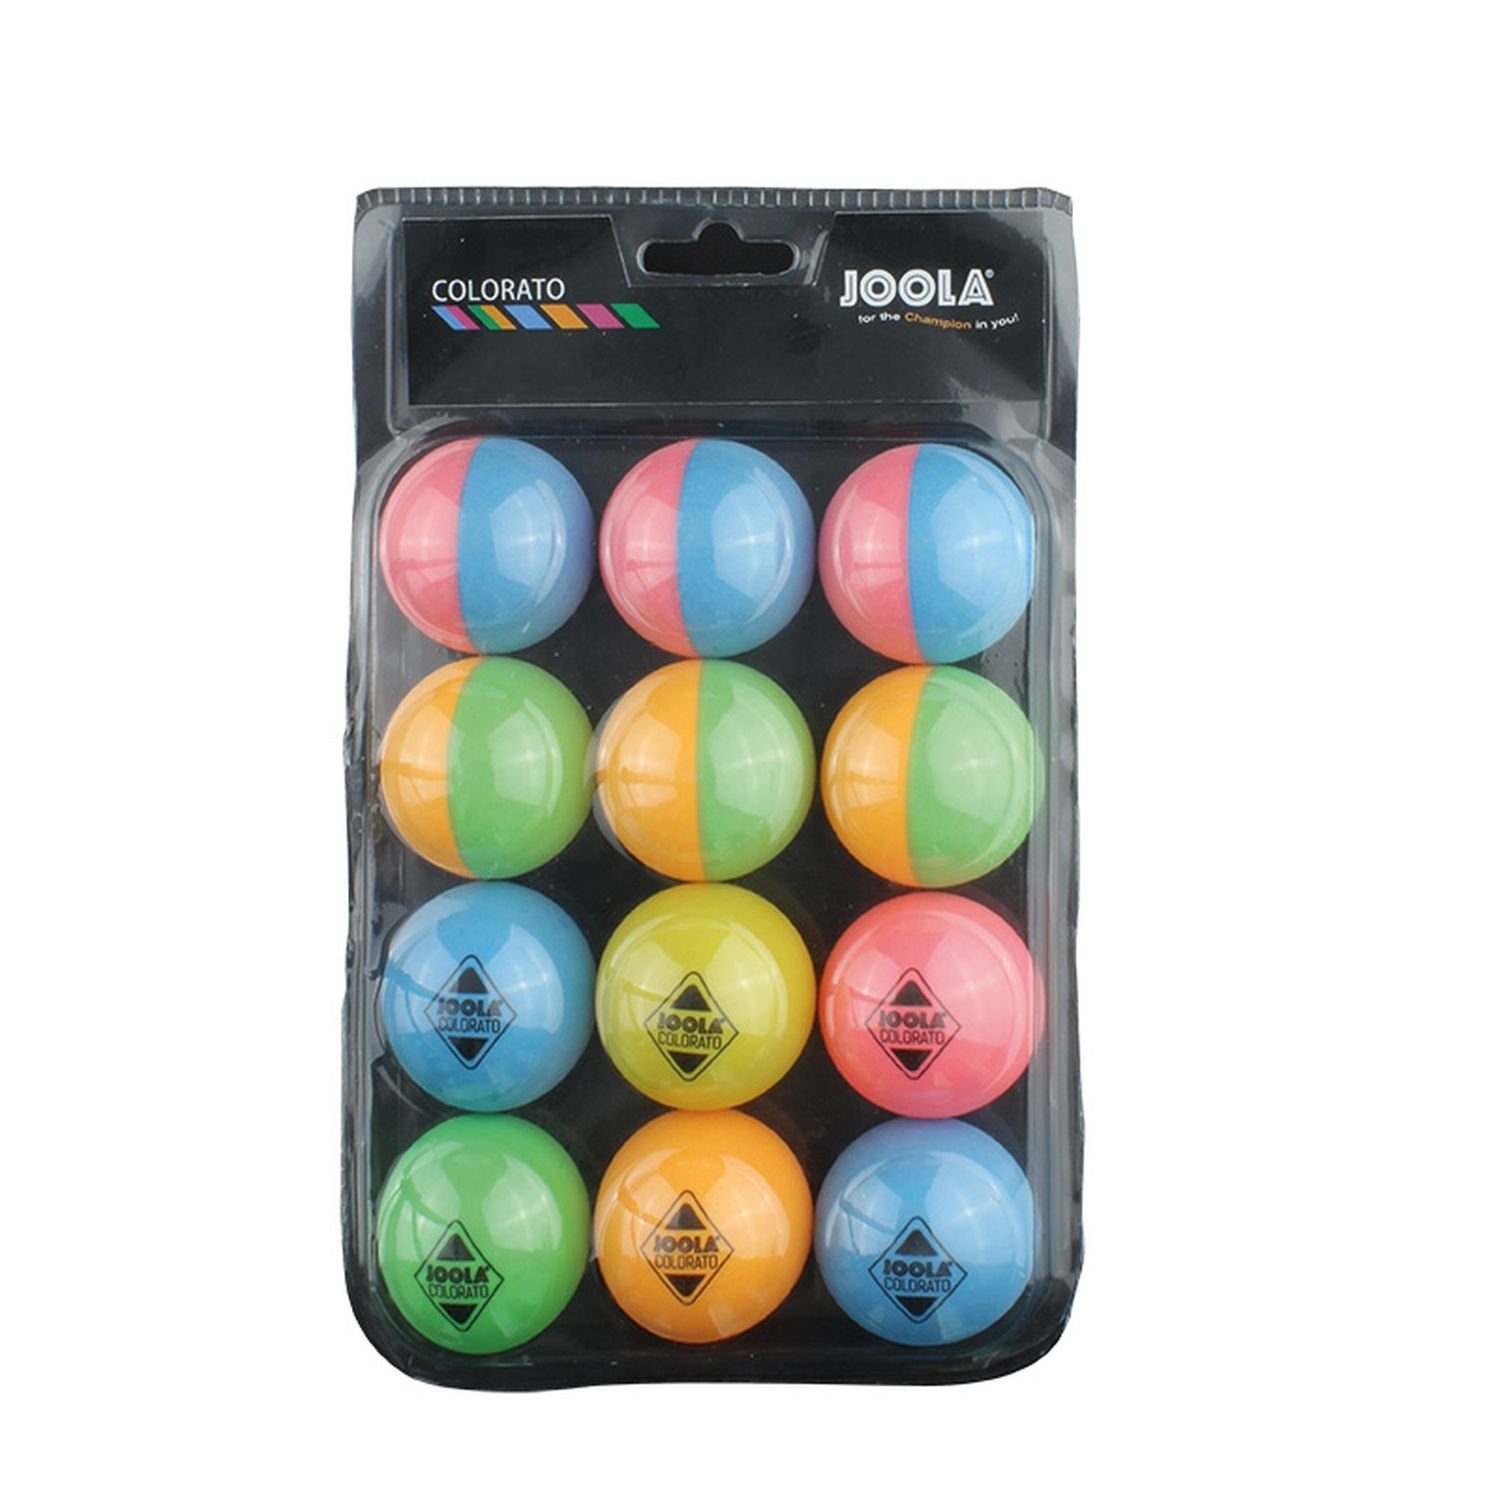 Bälle bunten Tischtennisball mit Colorato Tischtennis 12 Tischtennisball Joola Balls Ballset Bällen, Ball Tischtennis